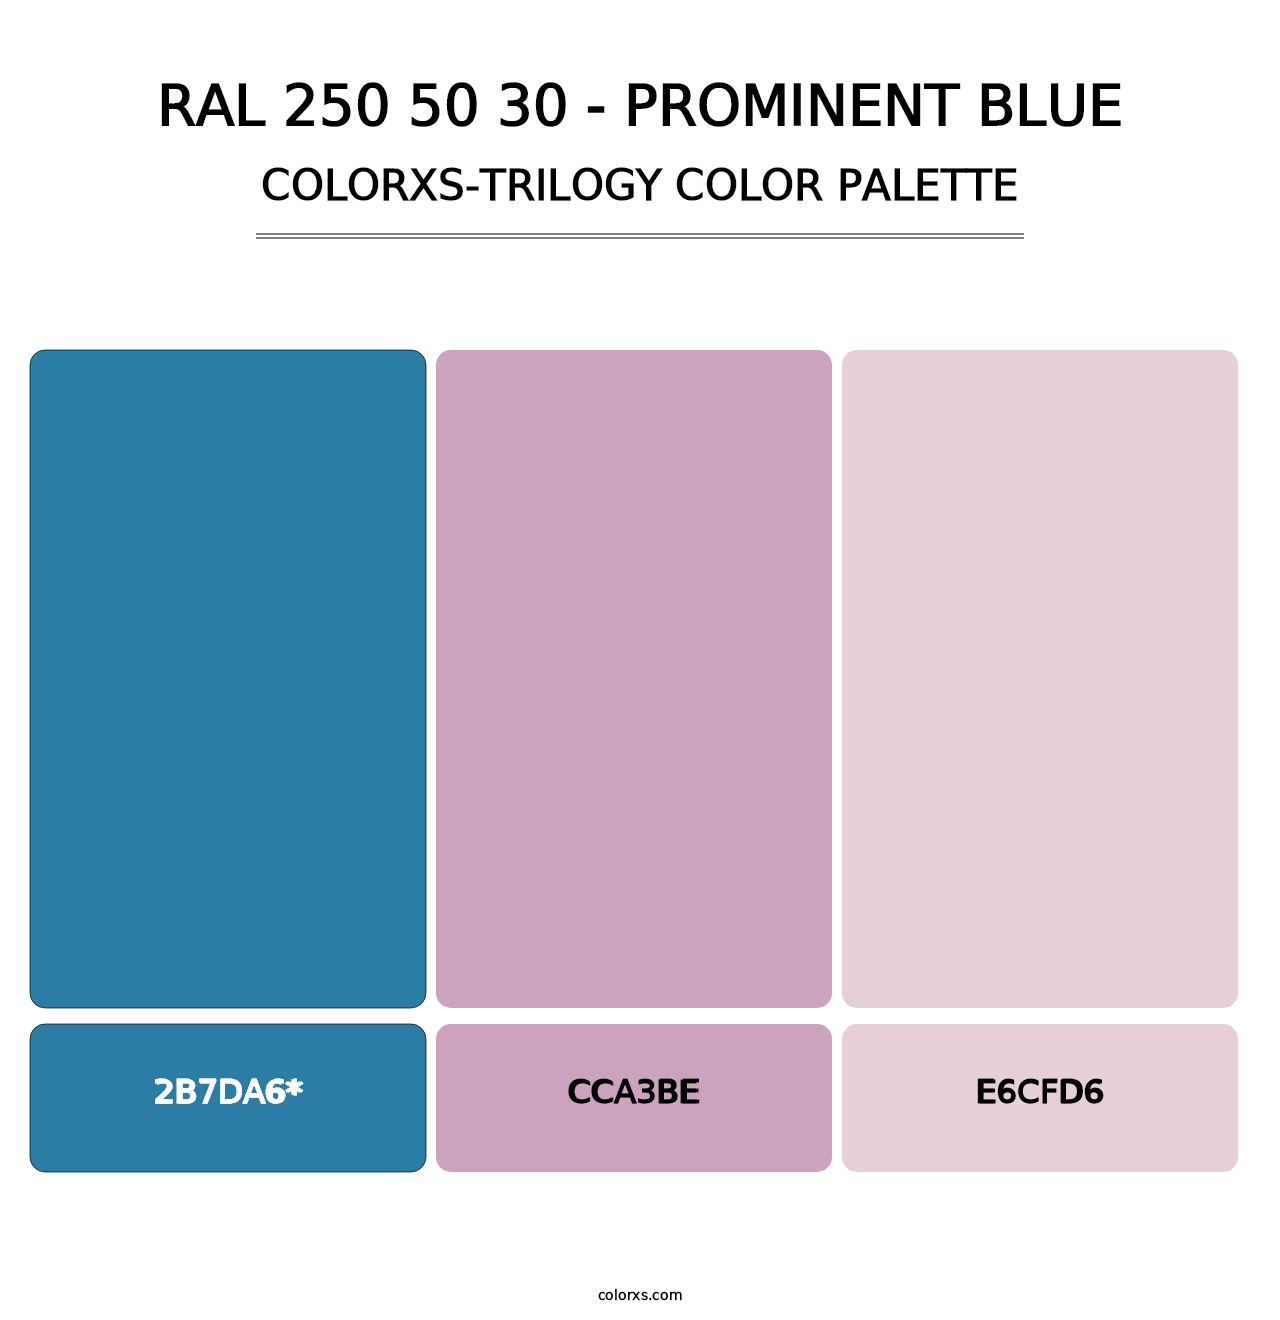 RAL 250 50 30 - Prominent Blue - Colorxs Trilogy Palette